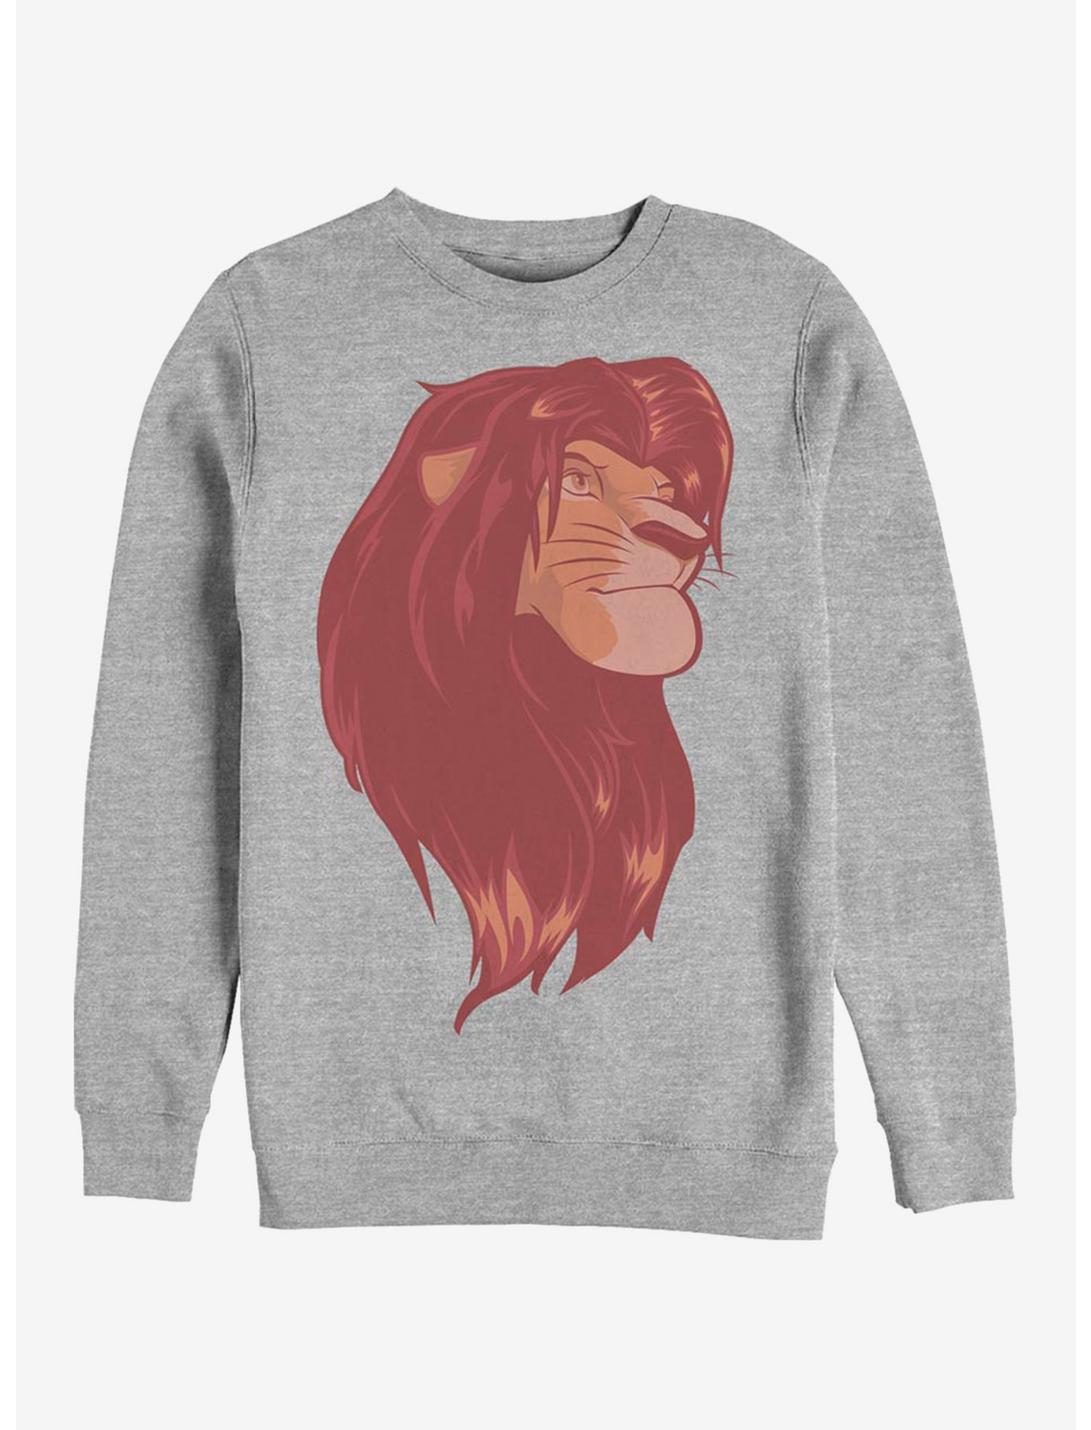 Disney The Lion King King Crew Sweatshirt, ATH HTR, hi-res